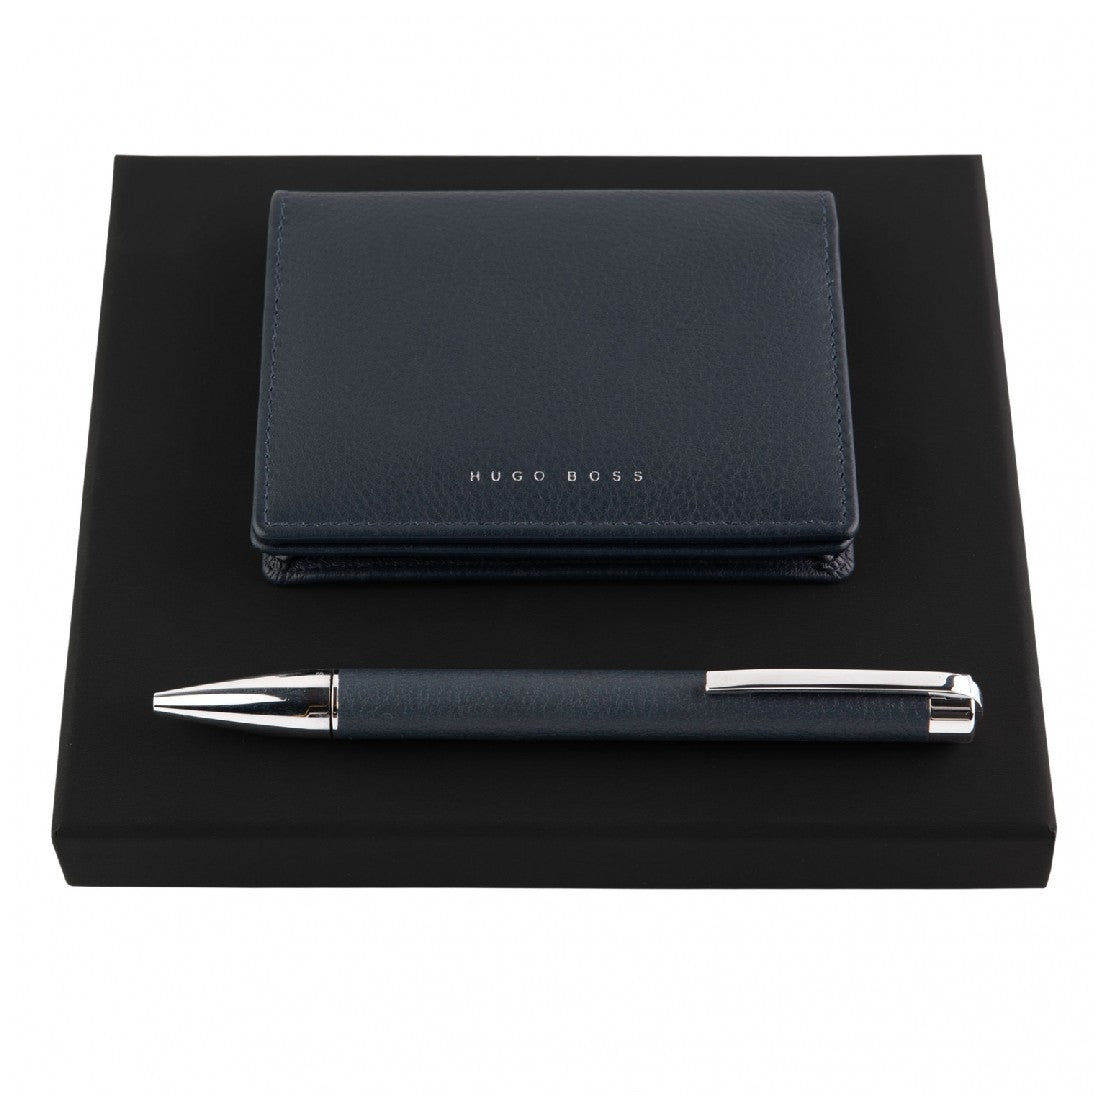 Hugo Boss Dark Blue Pen and Wallet Set for Men - HBSET-0002(PEN+C/H)